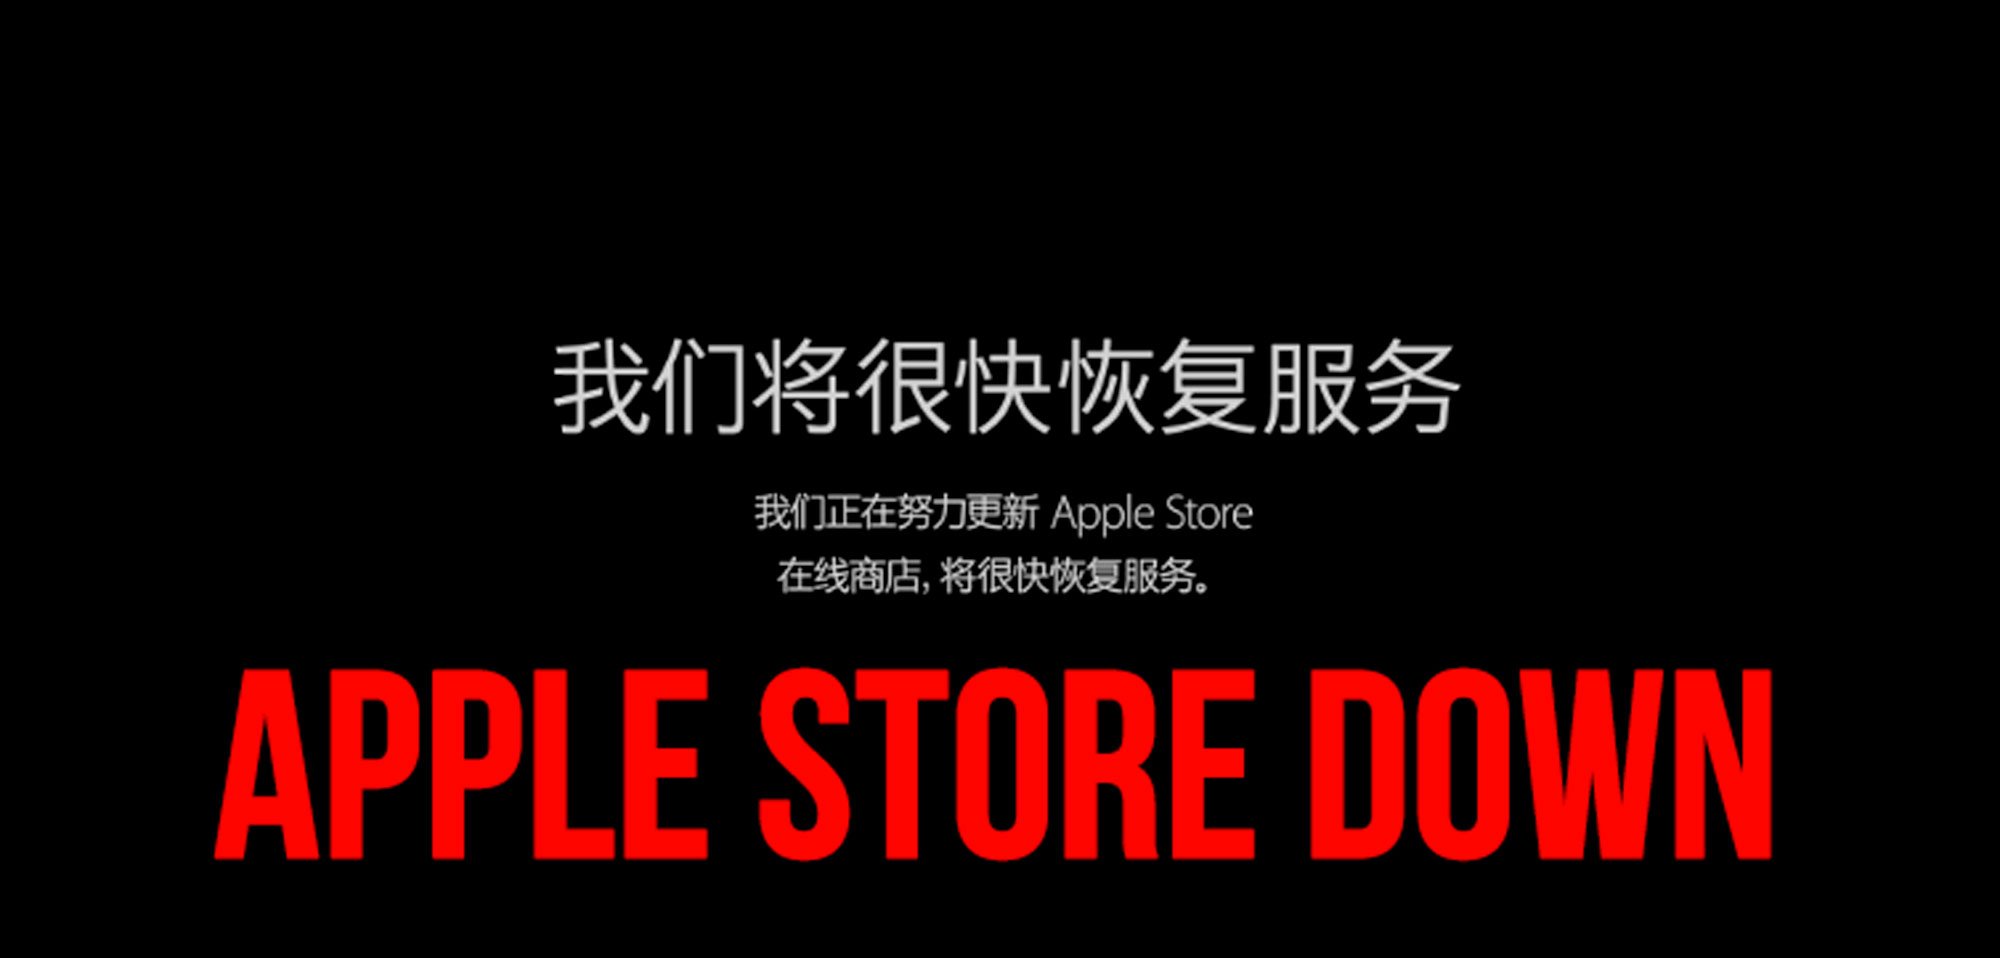 Apple Store down: Neue iPads und iMacs! 6